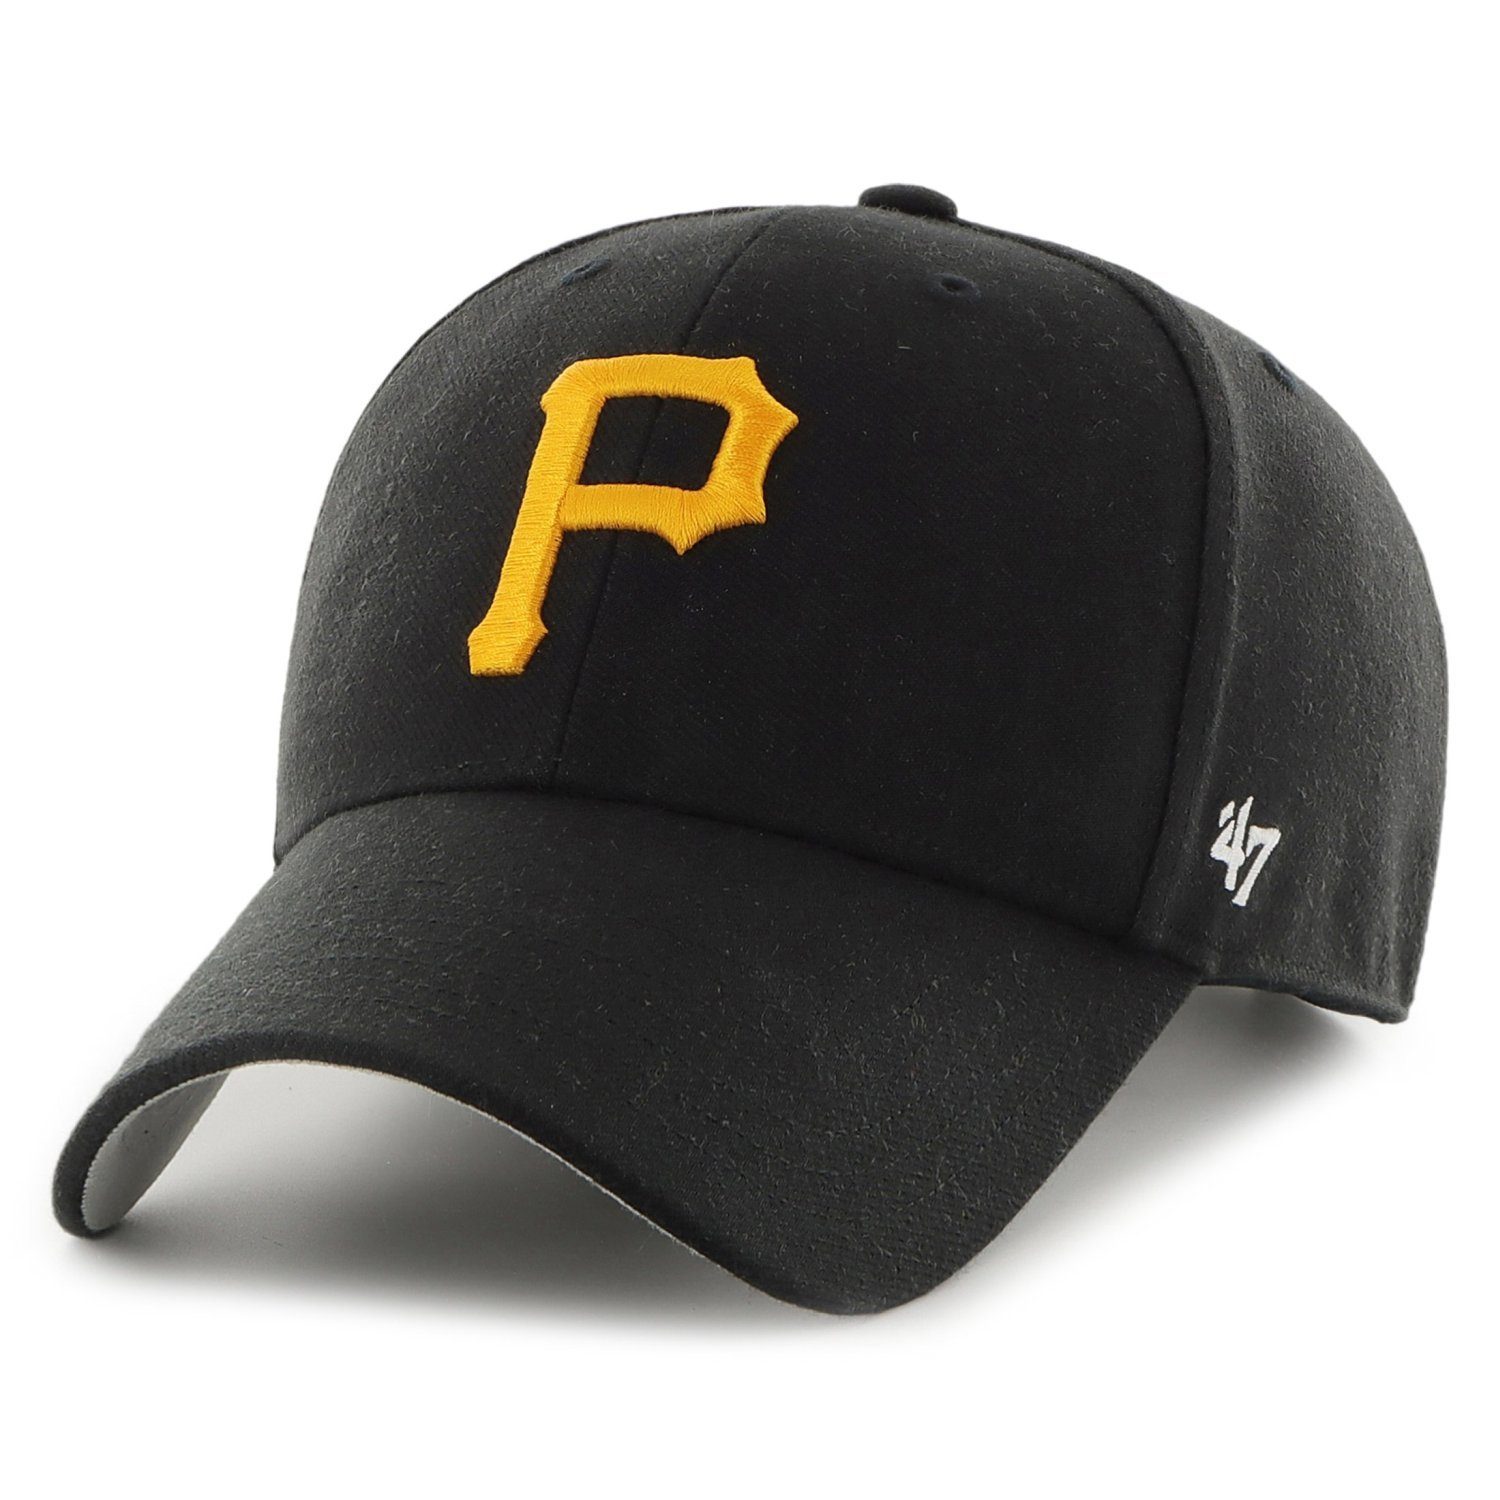 Snapback '47 Brand Pittsburgh SERIES Pirates WORLD Cap